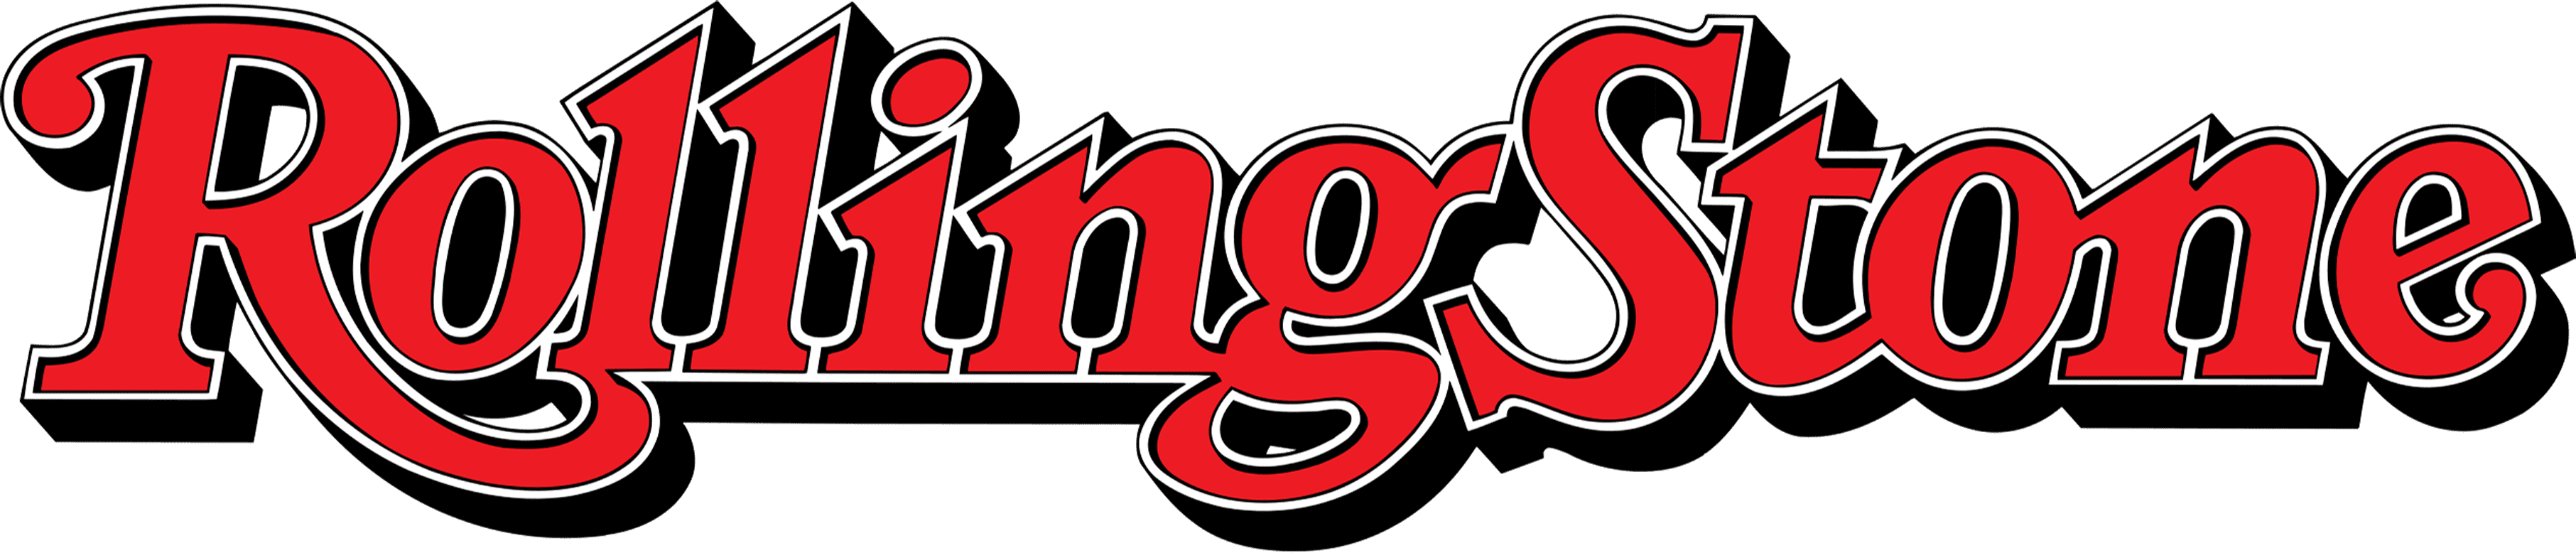 Rolling-Stone-Logo-1b